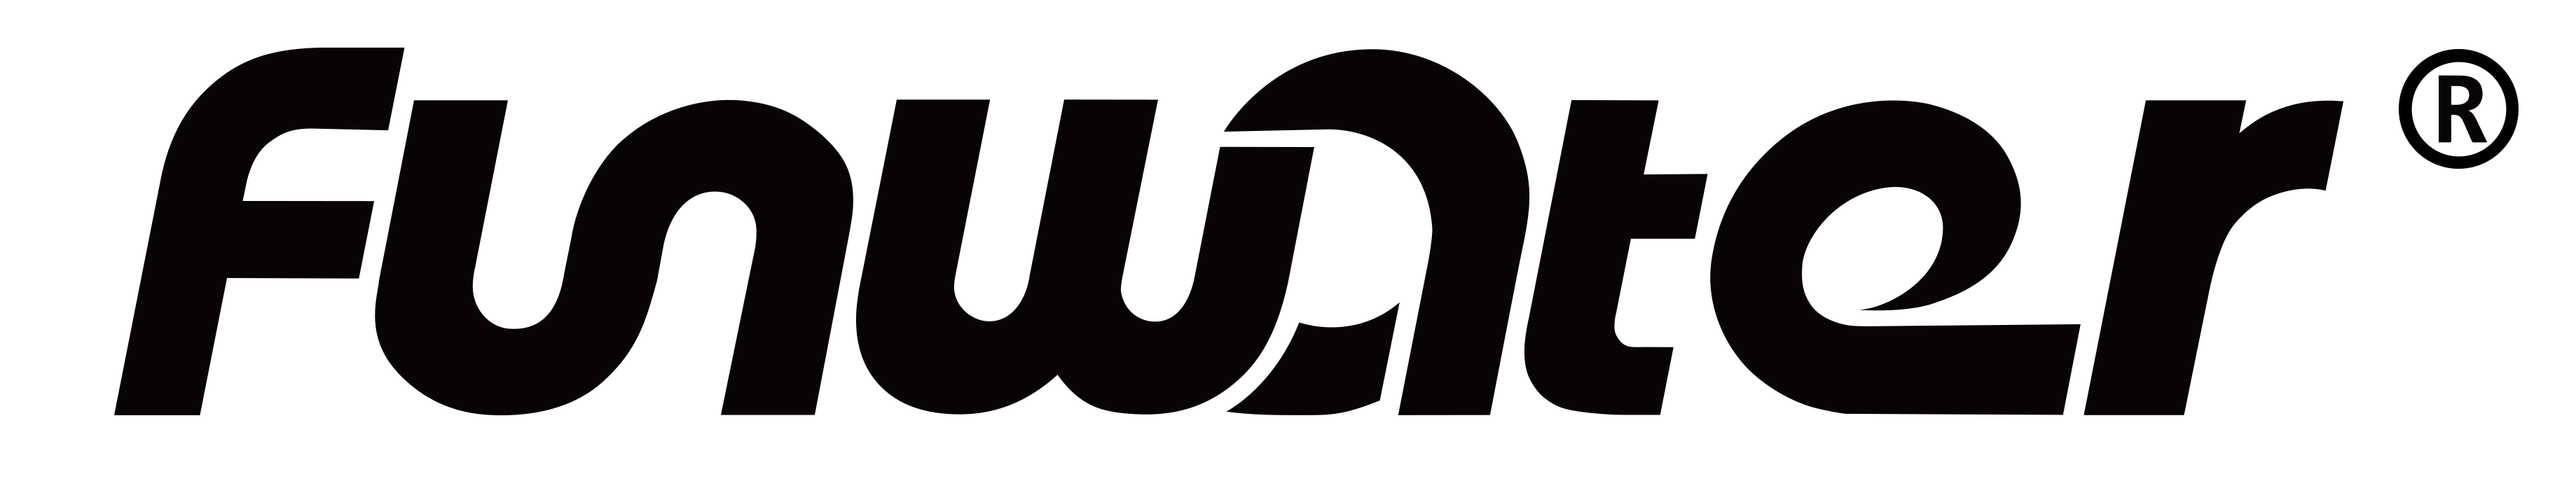 Funwater Logo in Black